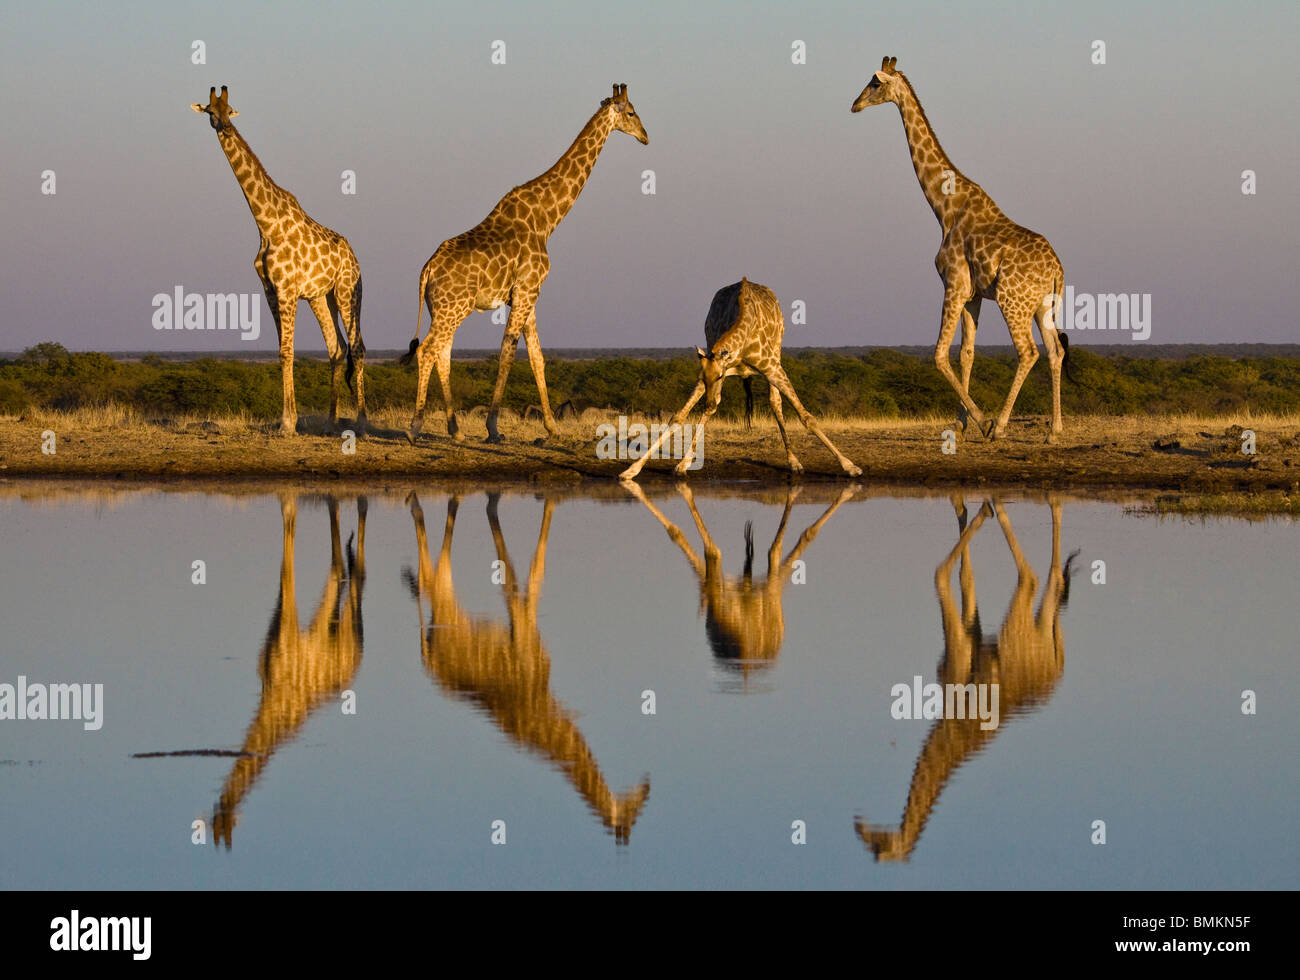 Giraffe al foro per l'acqua, riflessa nell'acqua, Etosha Pan, Namibia Foto Stock